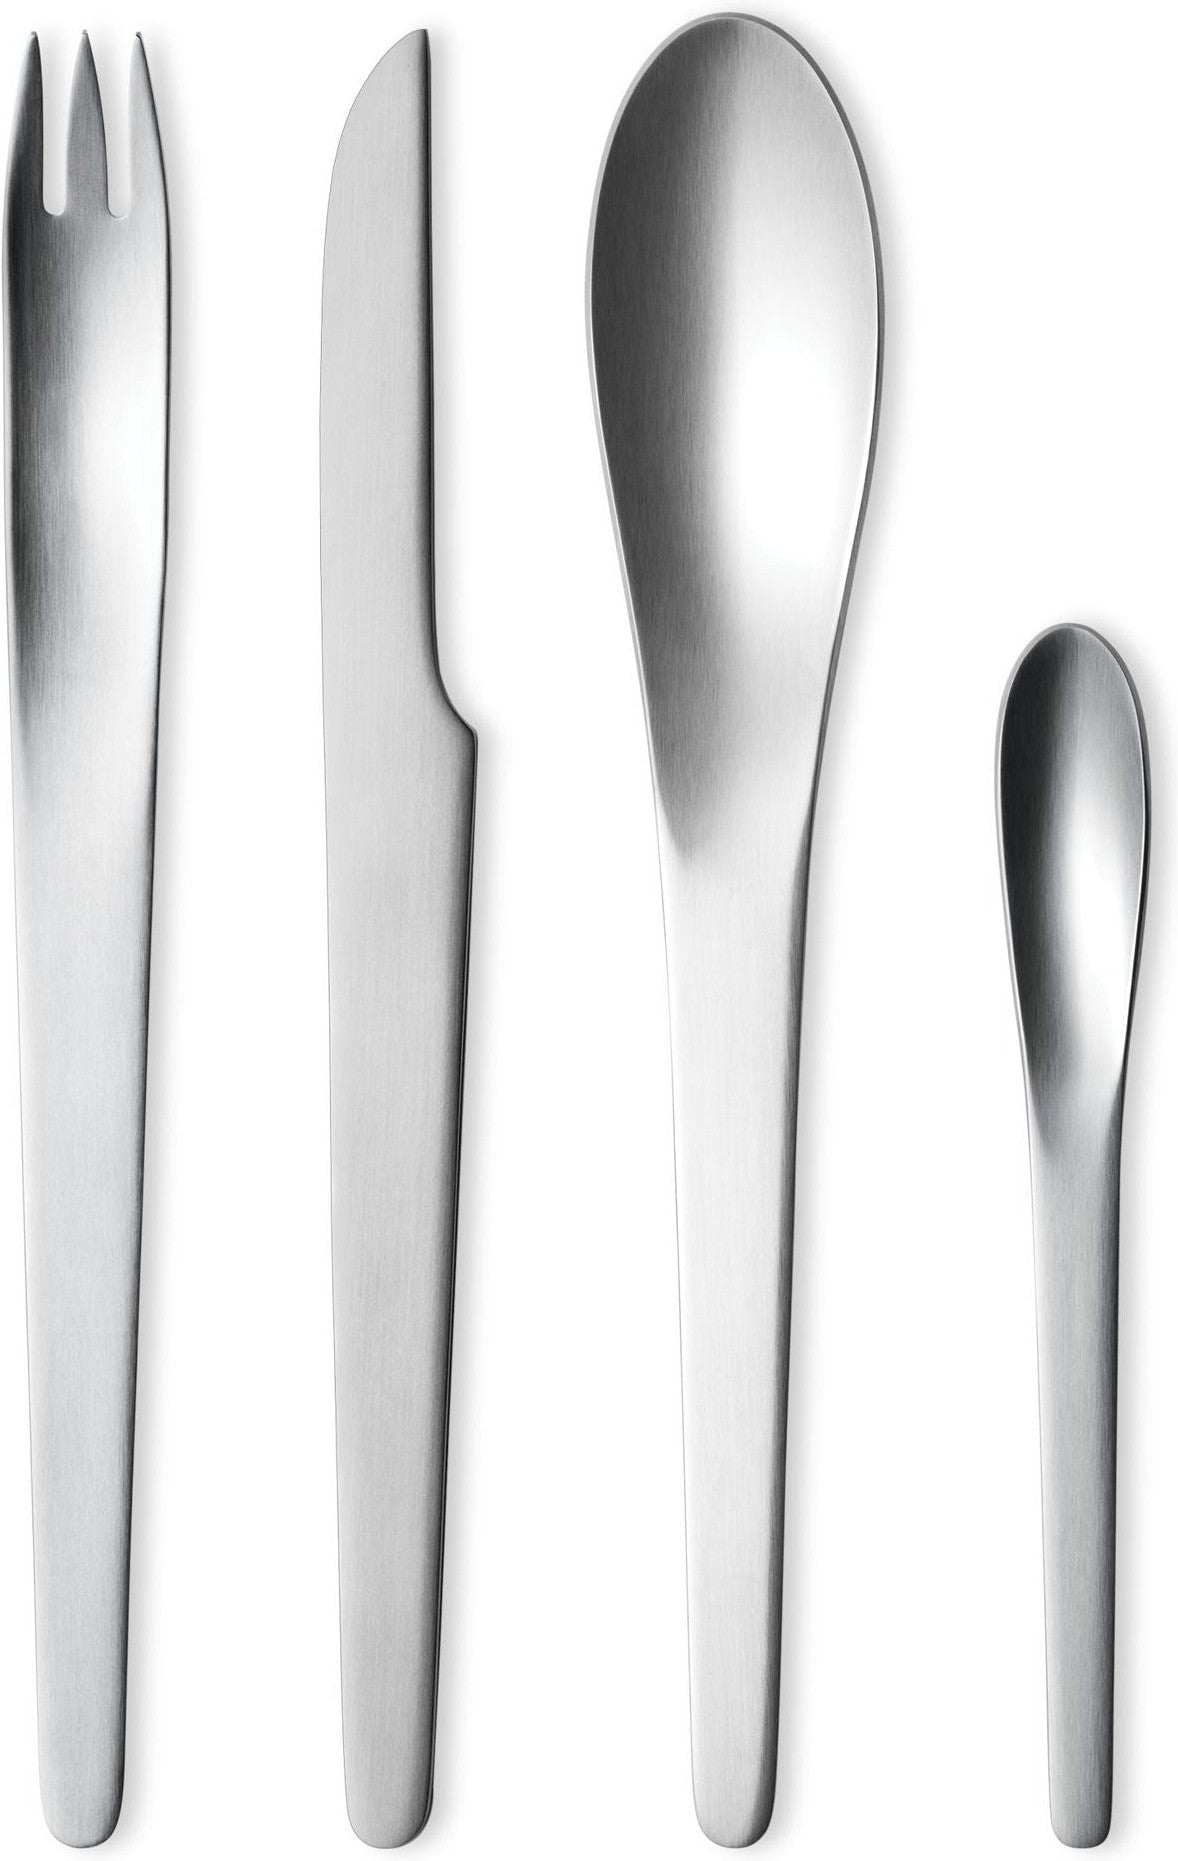 Georg Jensen Arne Jacobsen Cutlery, 4 Piece Set